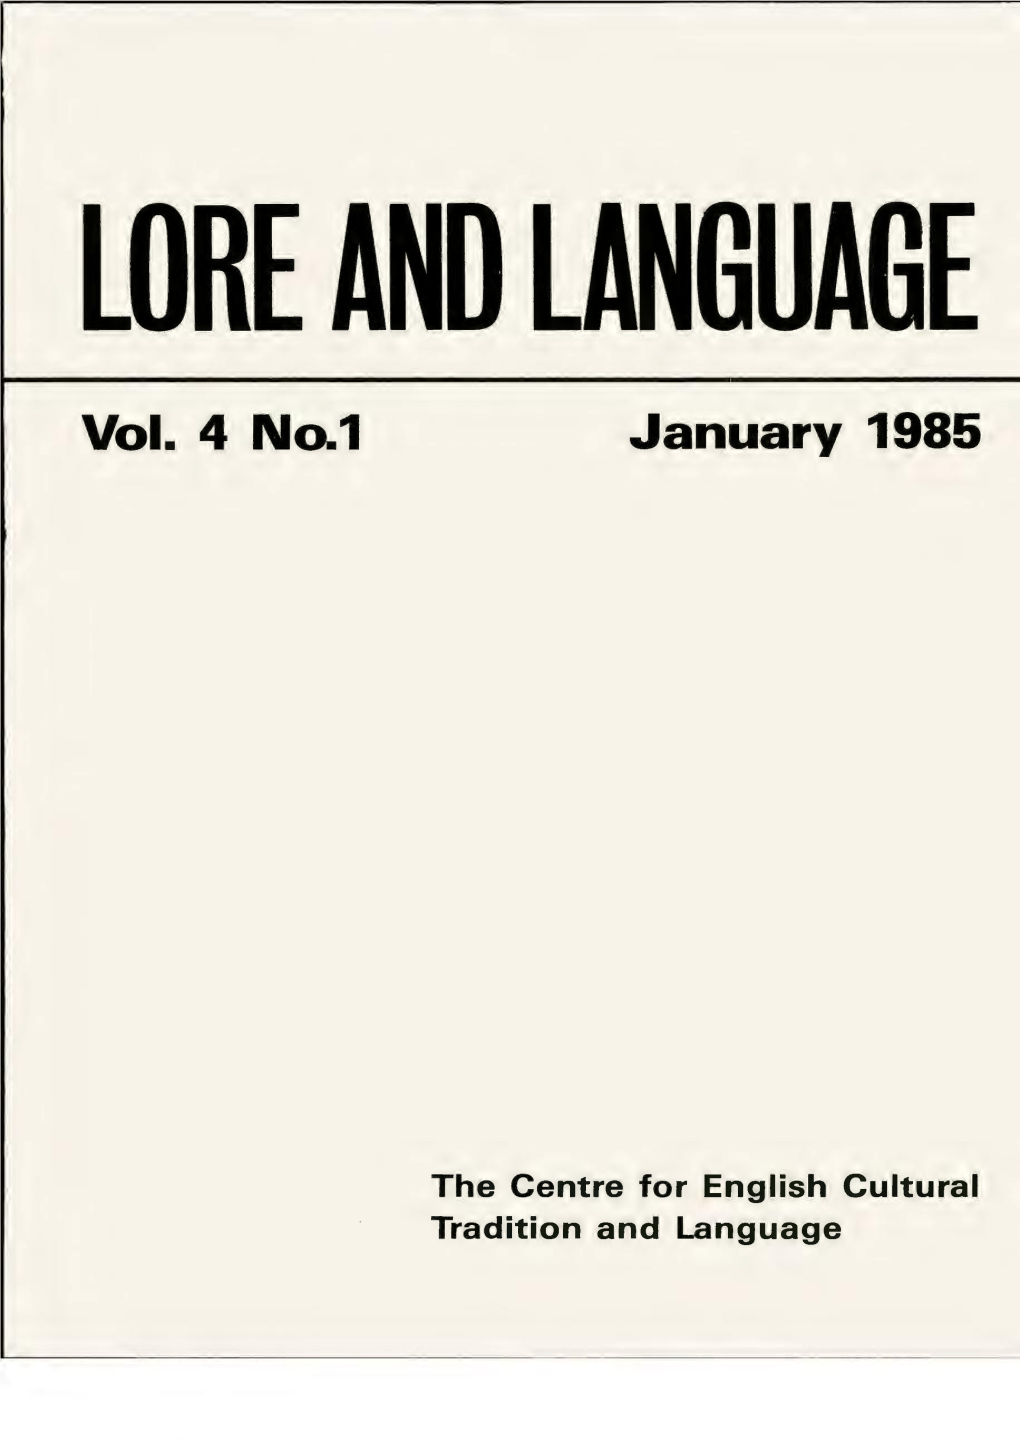 Vol. 4 No.1 January 1985